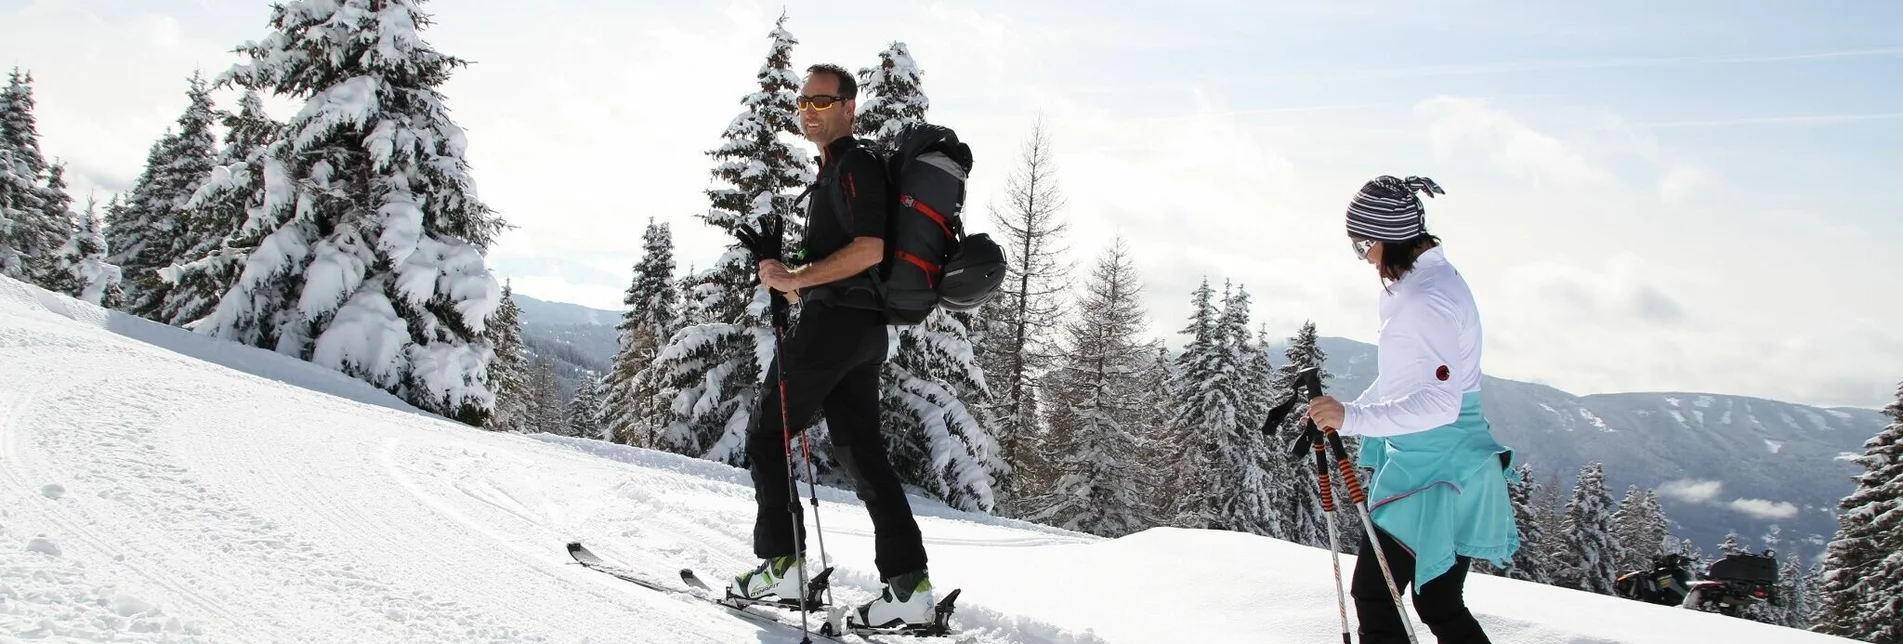 Ski Touring To the “Hirschnlackn” – about the winter markings - Touren-Impression #1 | © Tourismusverband Region Murau